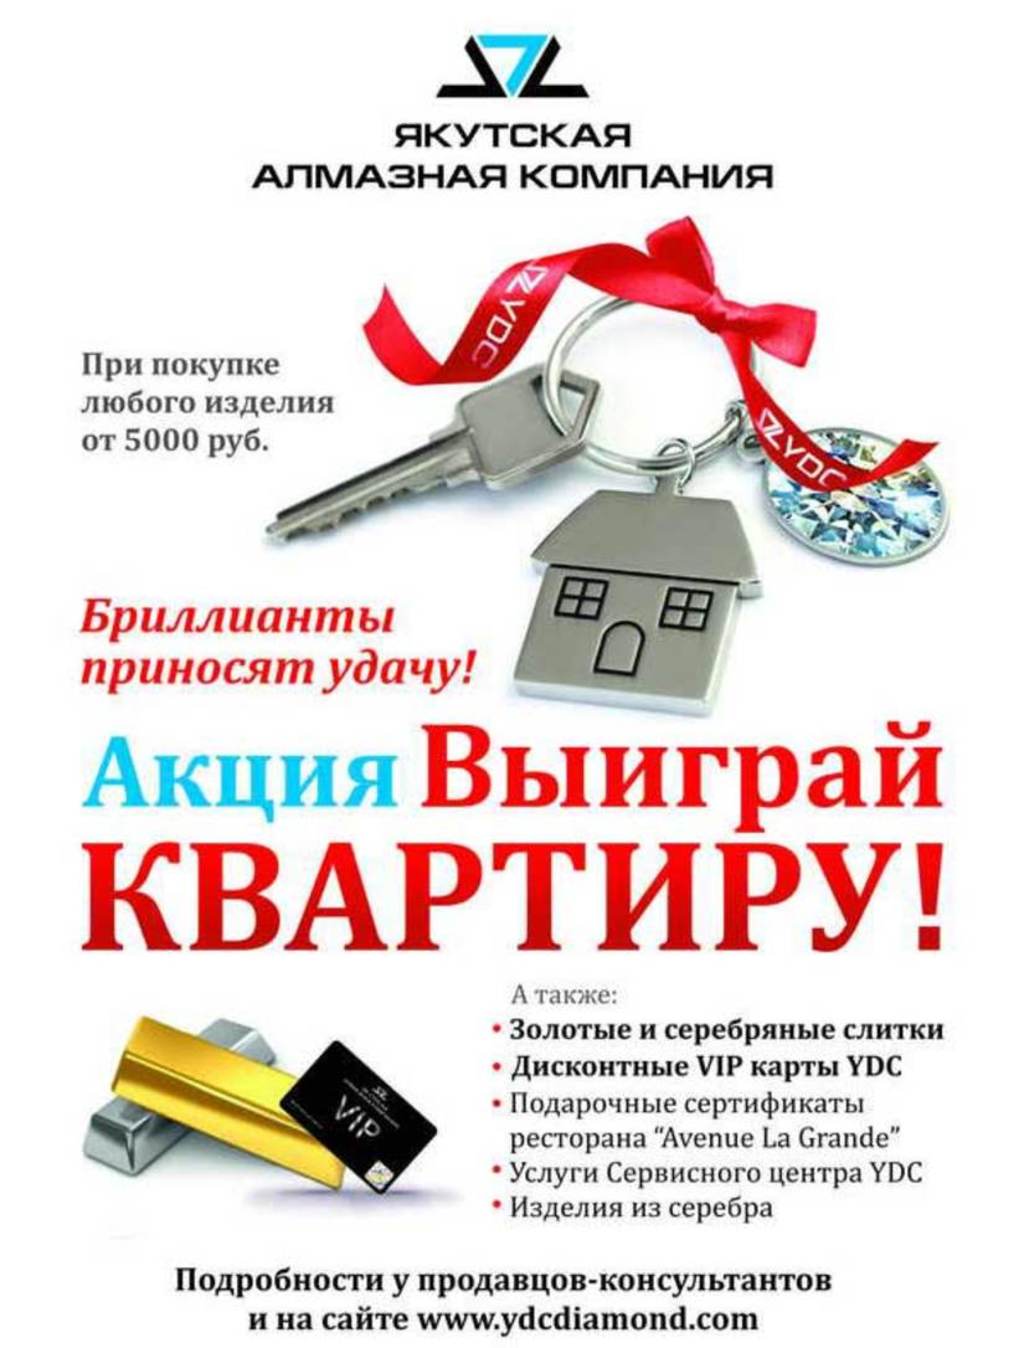 «Выиграй квартиру от YDC» в Якутске!